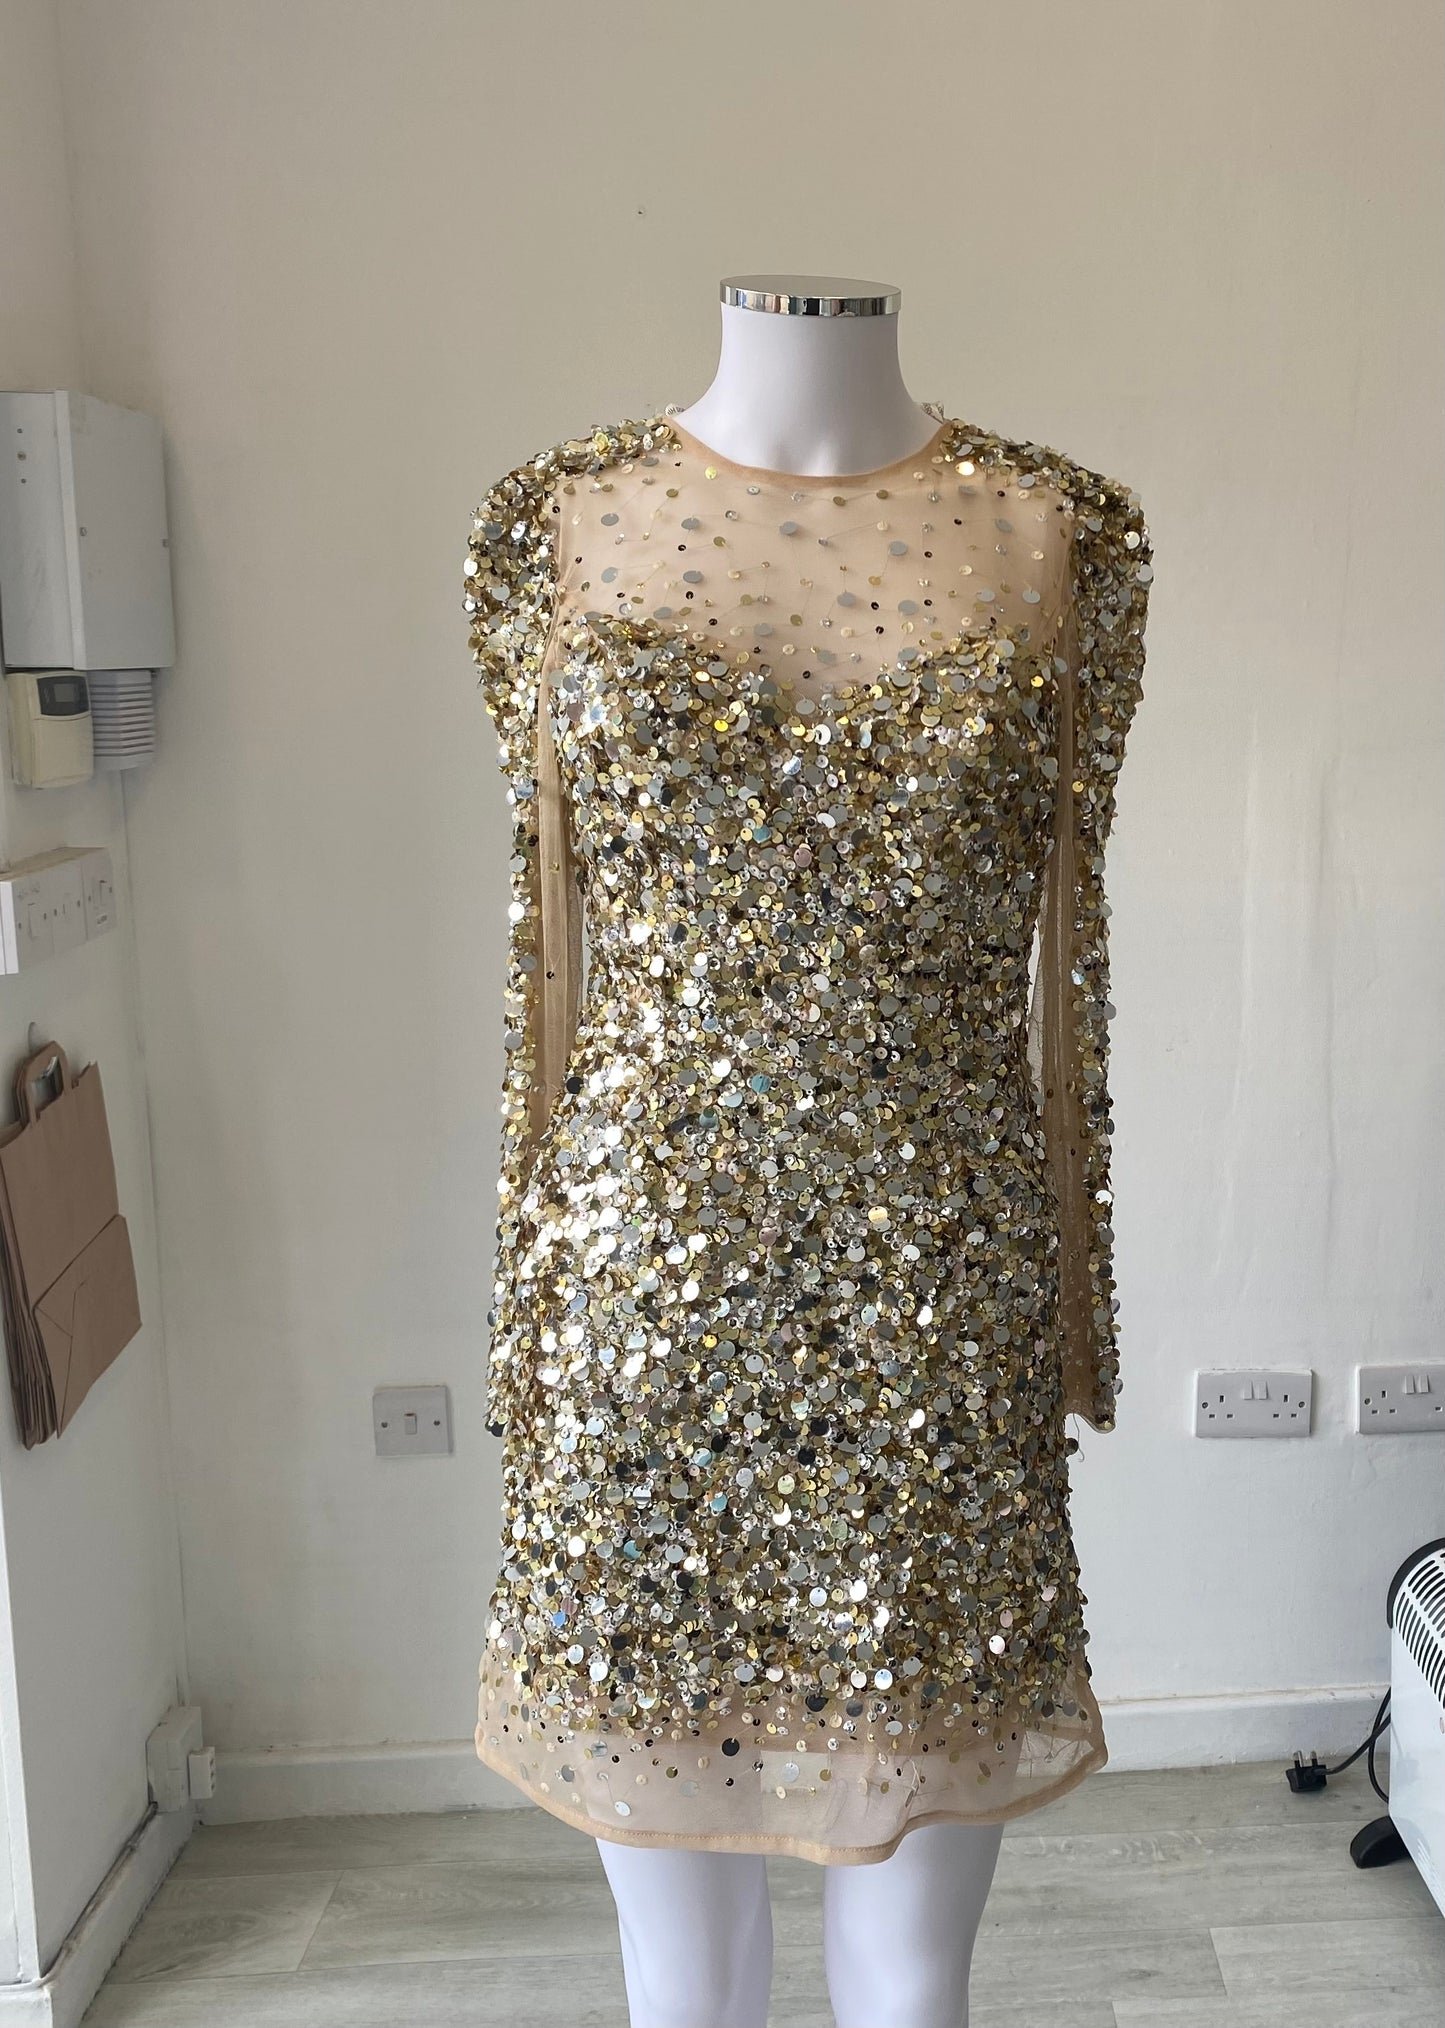 Sherri Hill Gold Sequin Dress Size 6